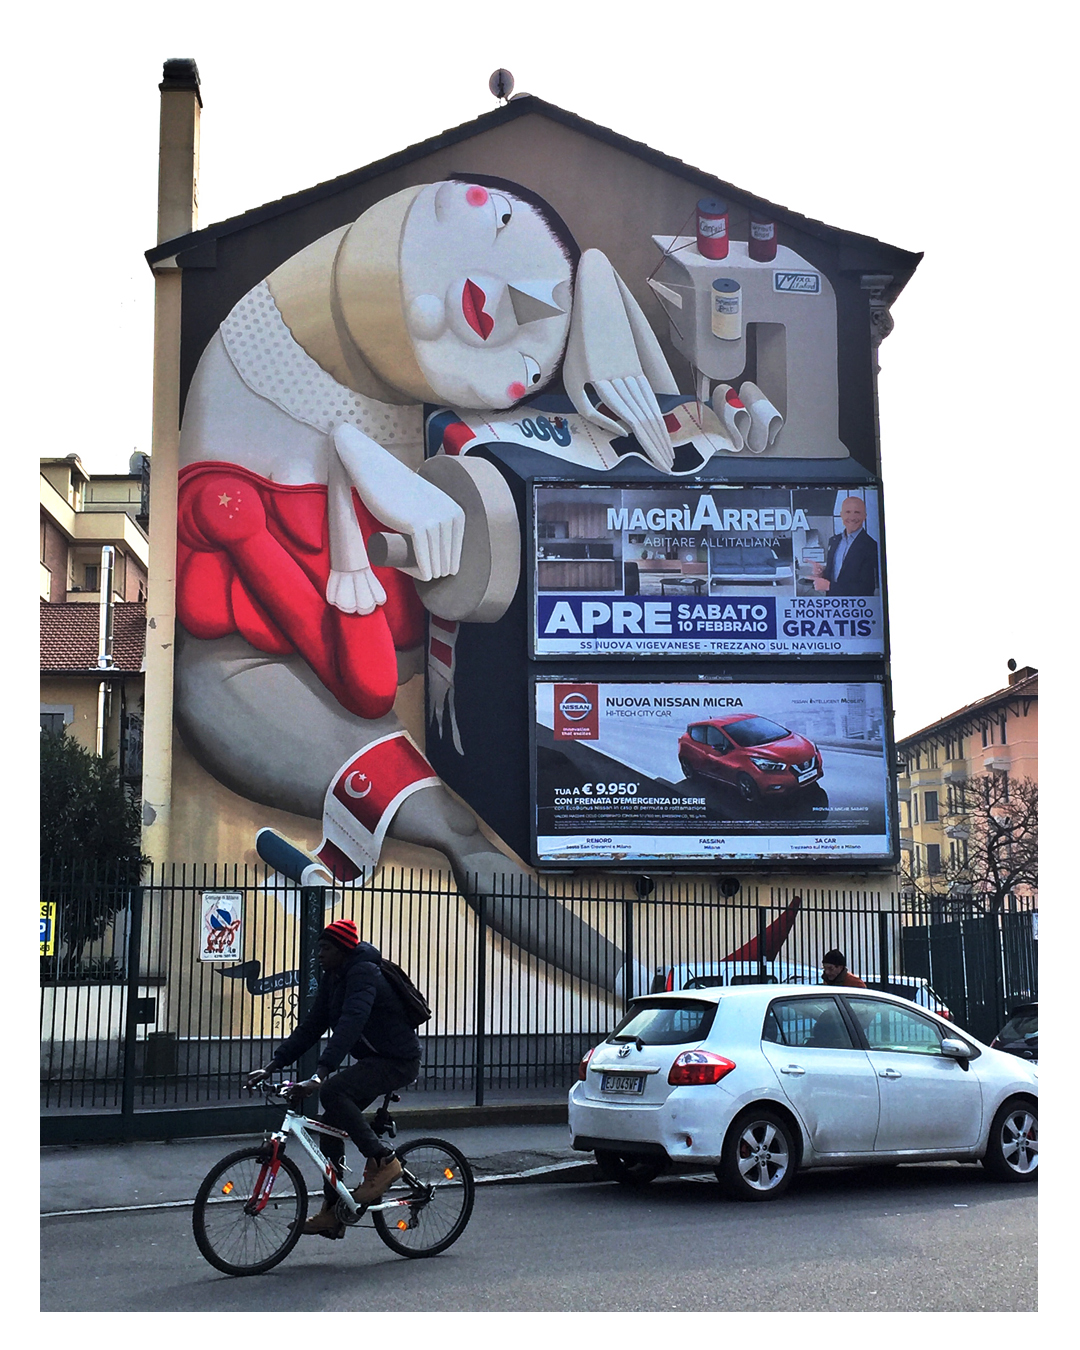 Zeds1 Street Art Mural in Milan, Italy. Photo ©Hookedblog / Mark Rigney